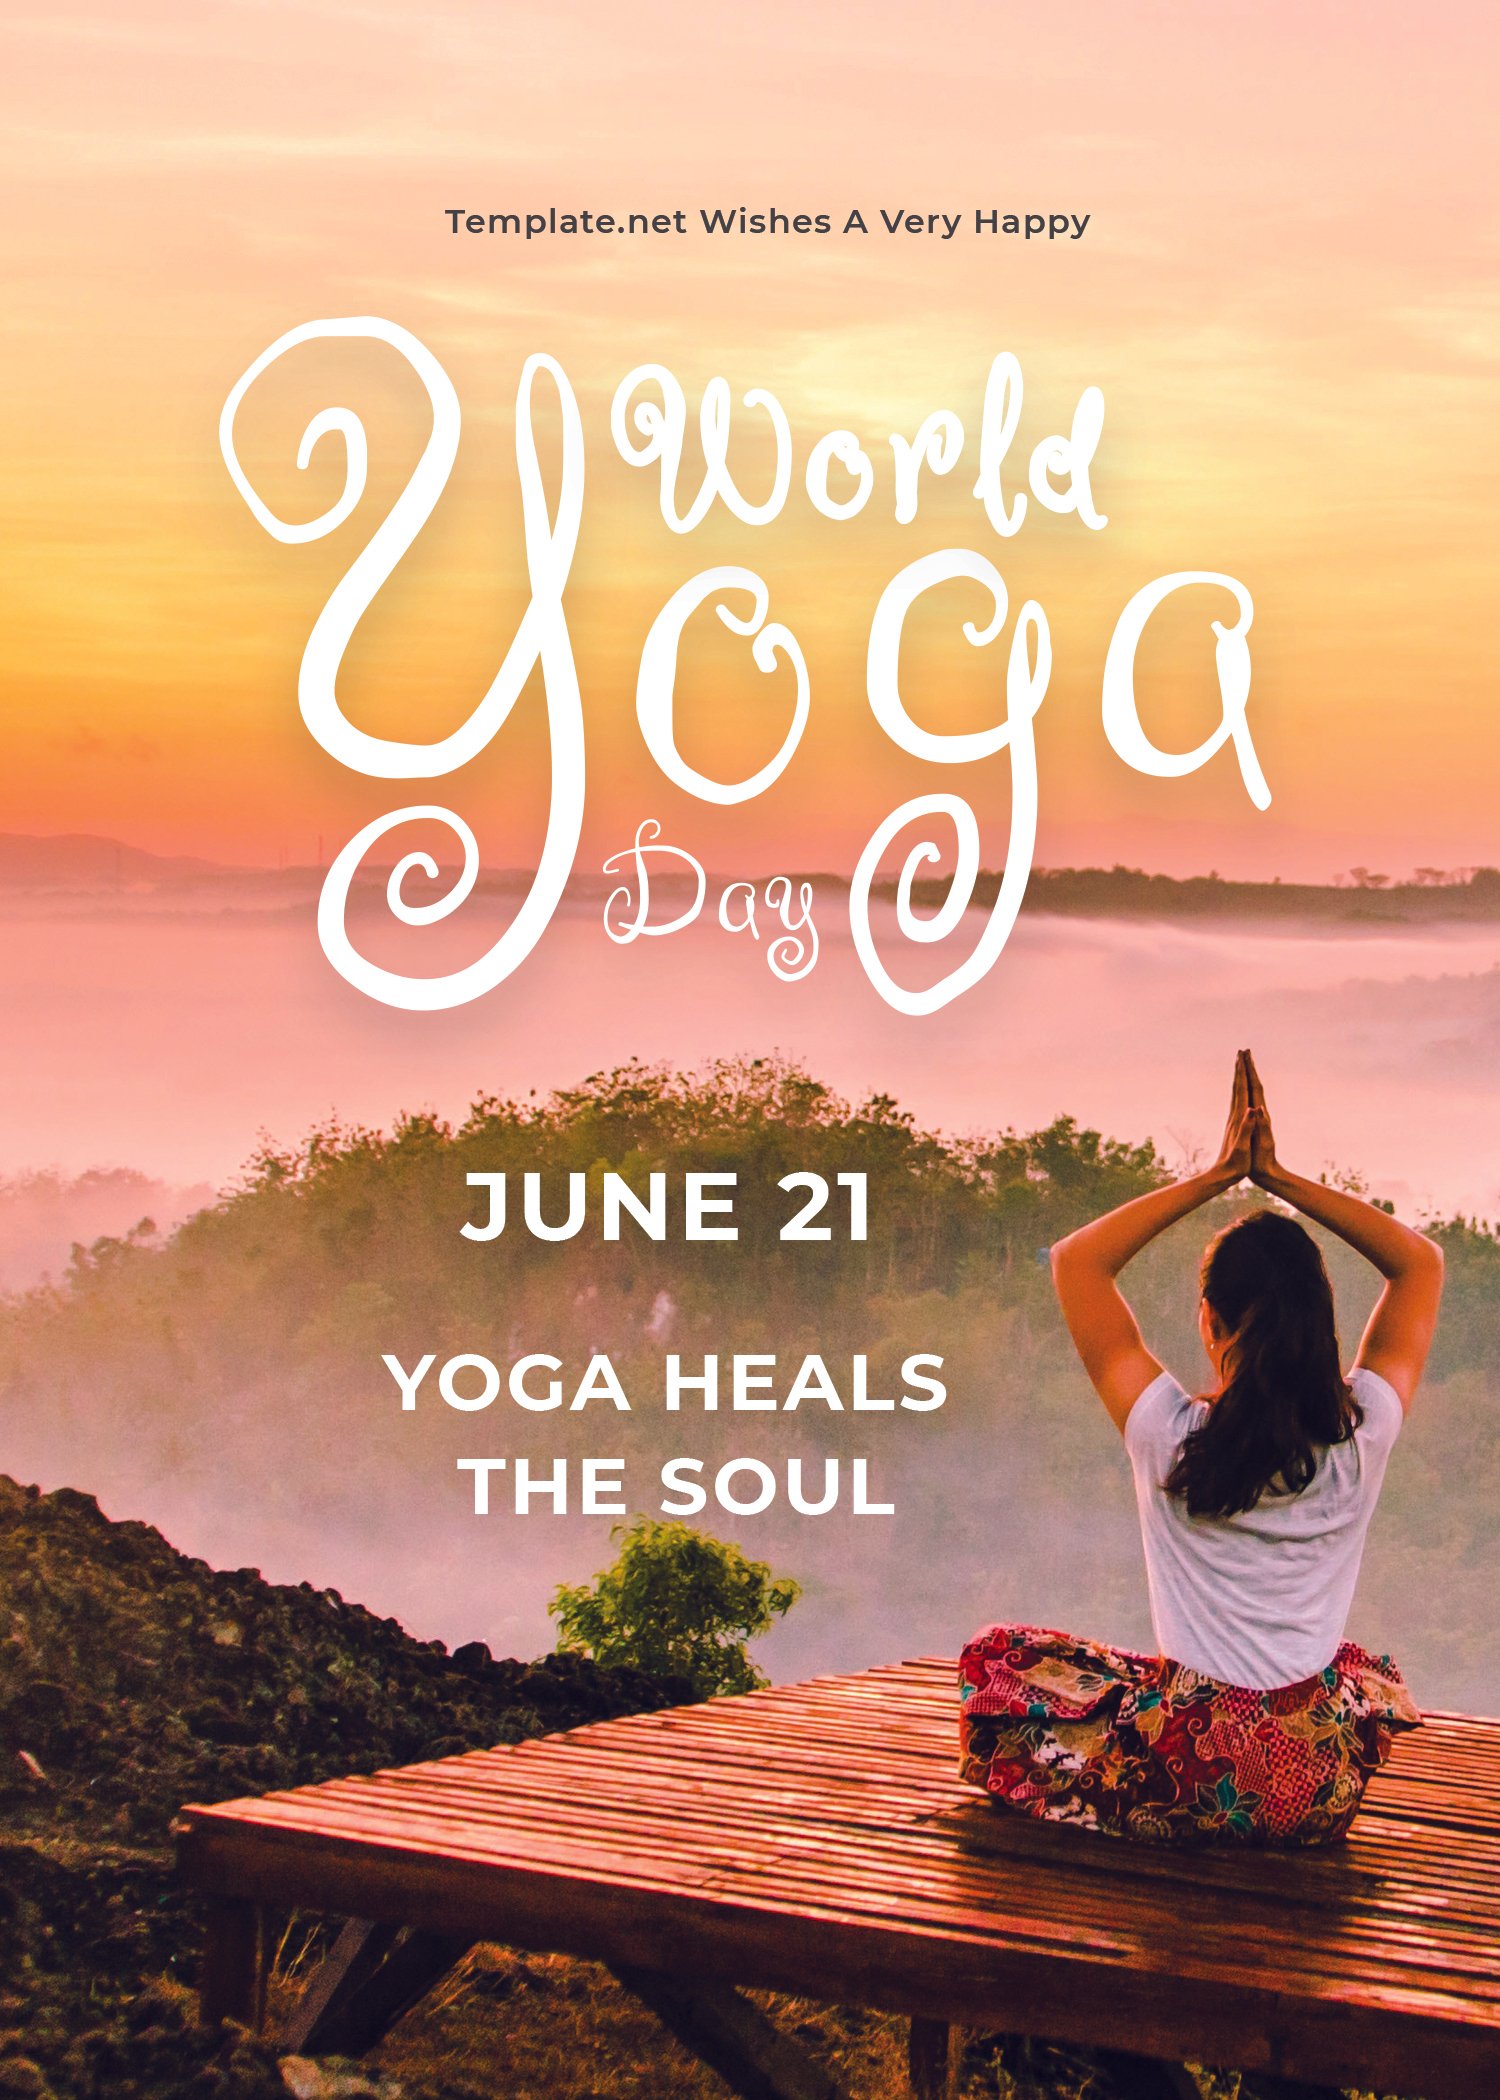 World Yoga Day Greeting Card Template